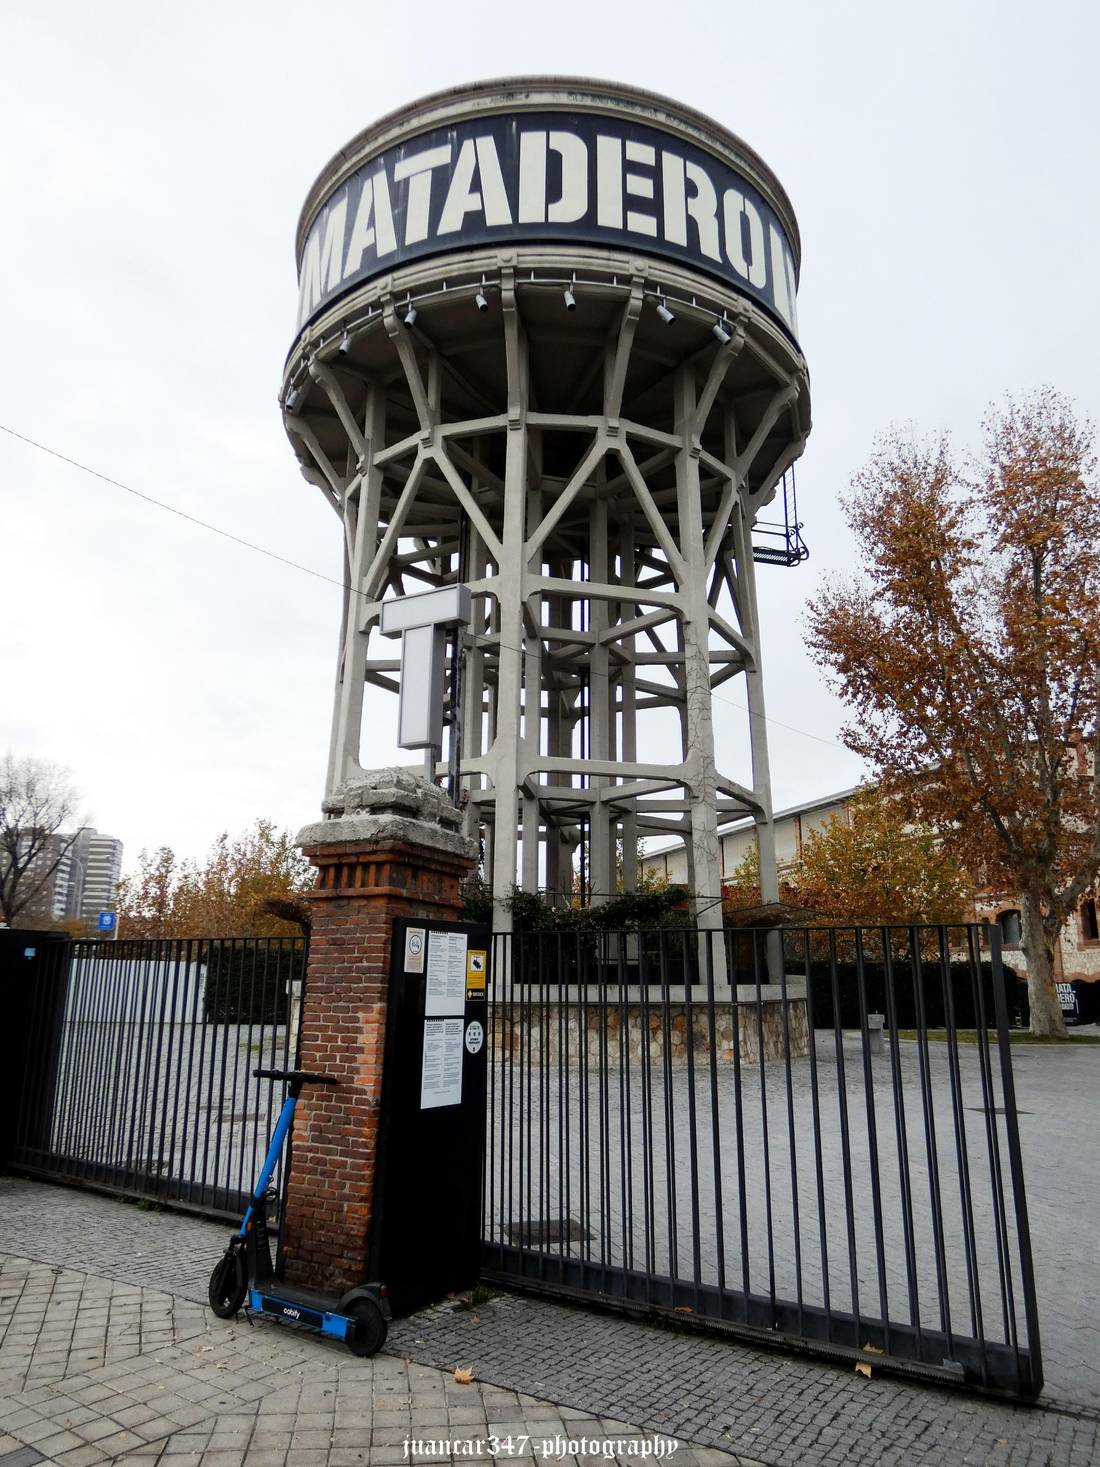 Matadero: An emblem of horror